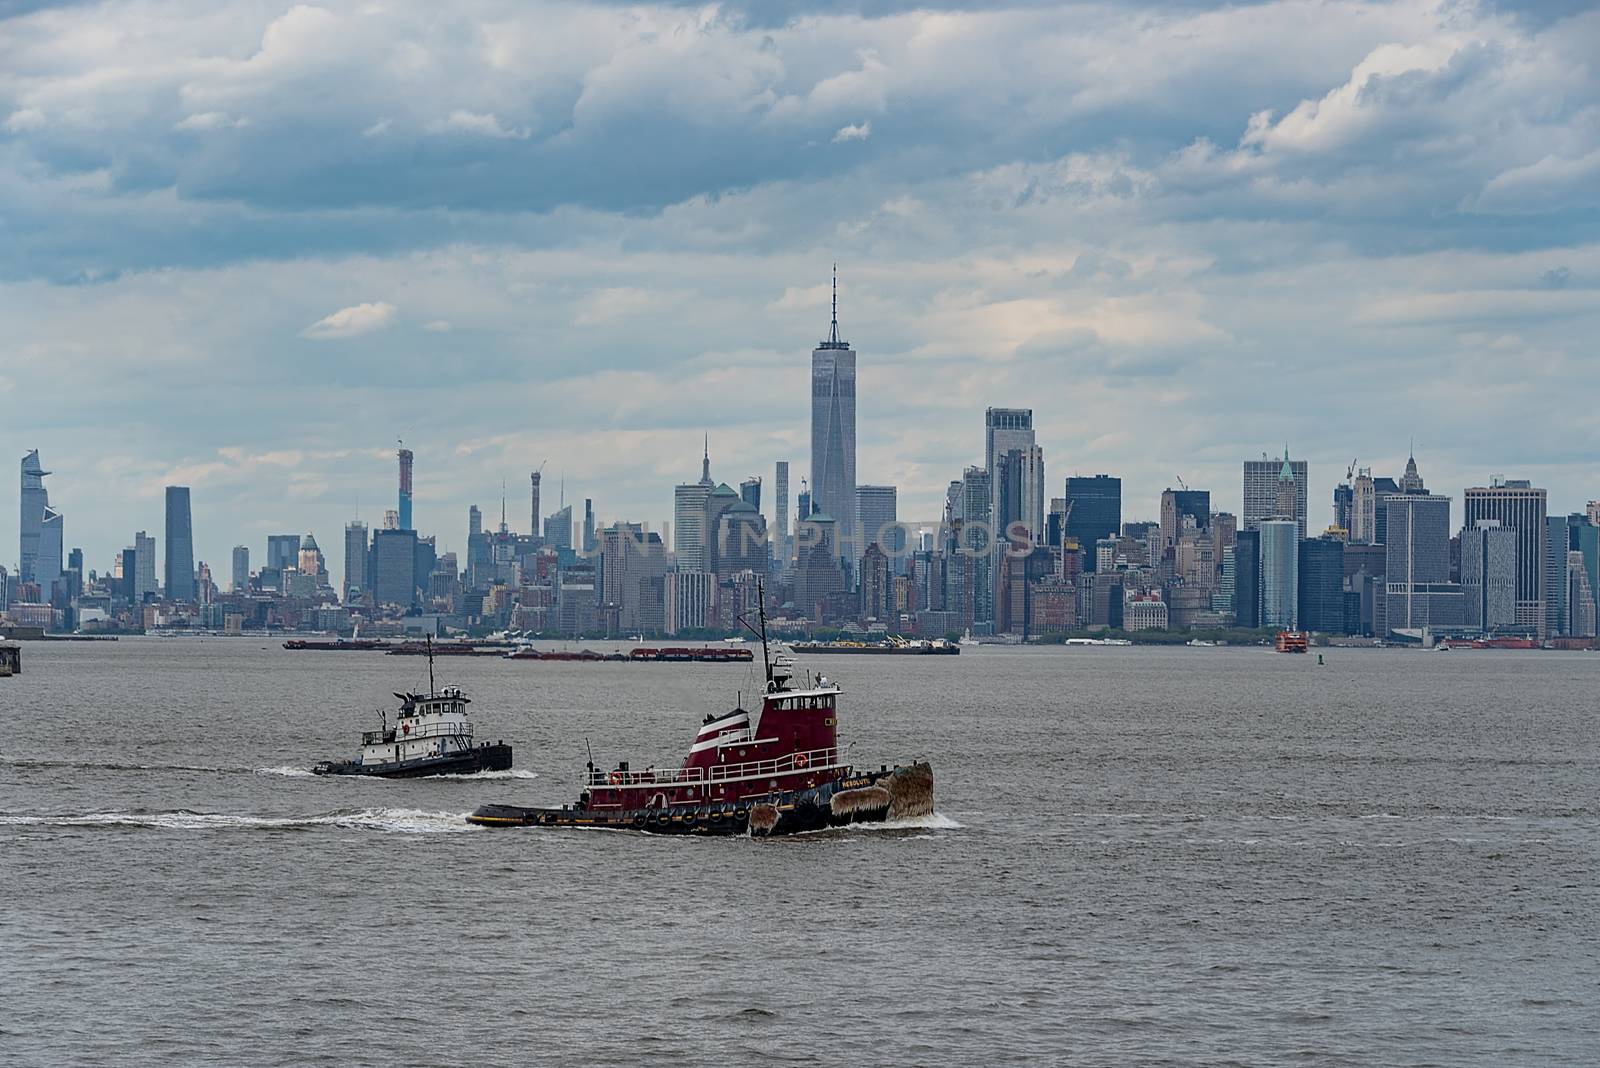 USA, New York, Staten Island - May 2019: New York and working tug boats